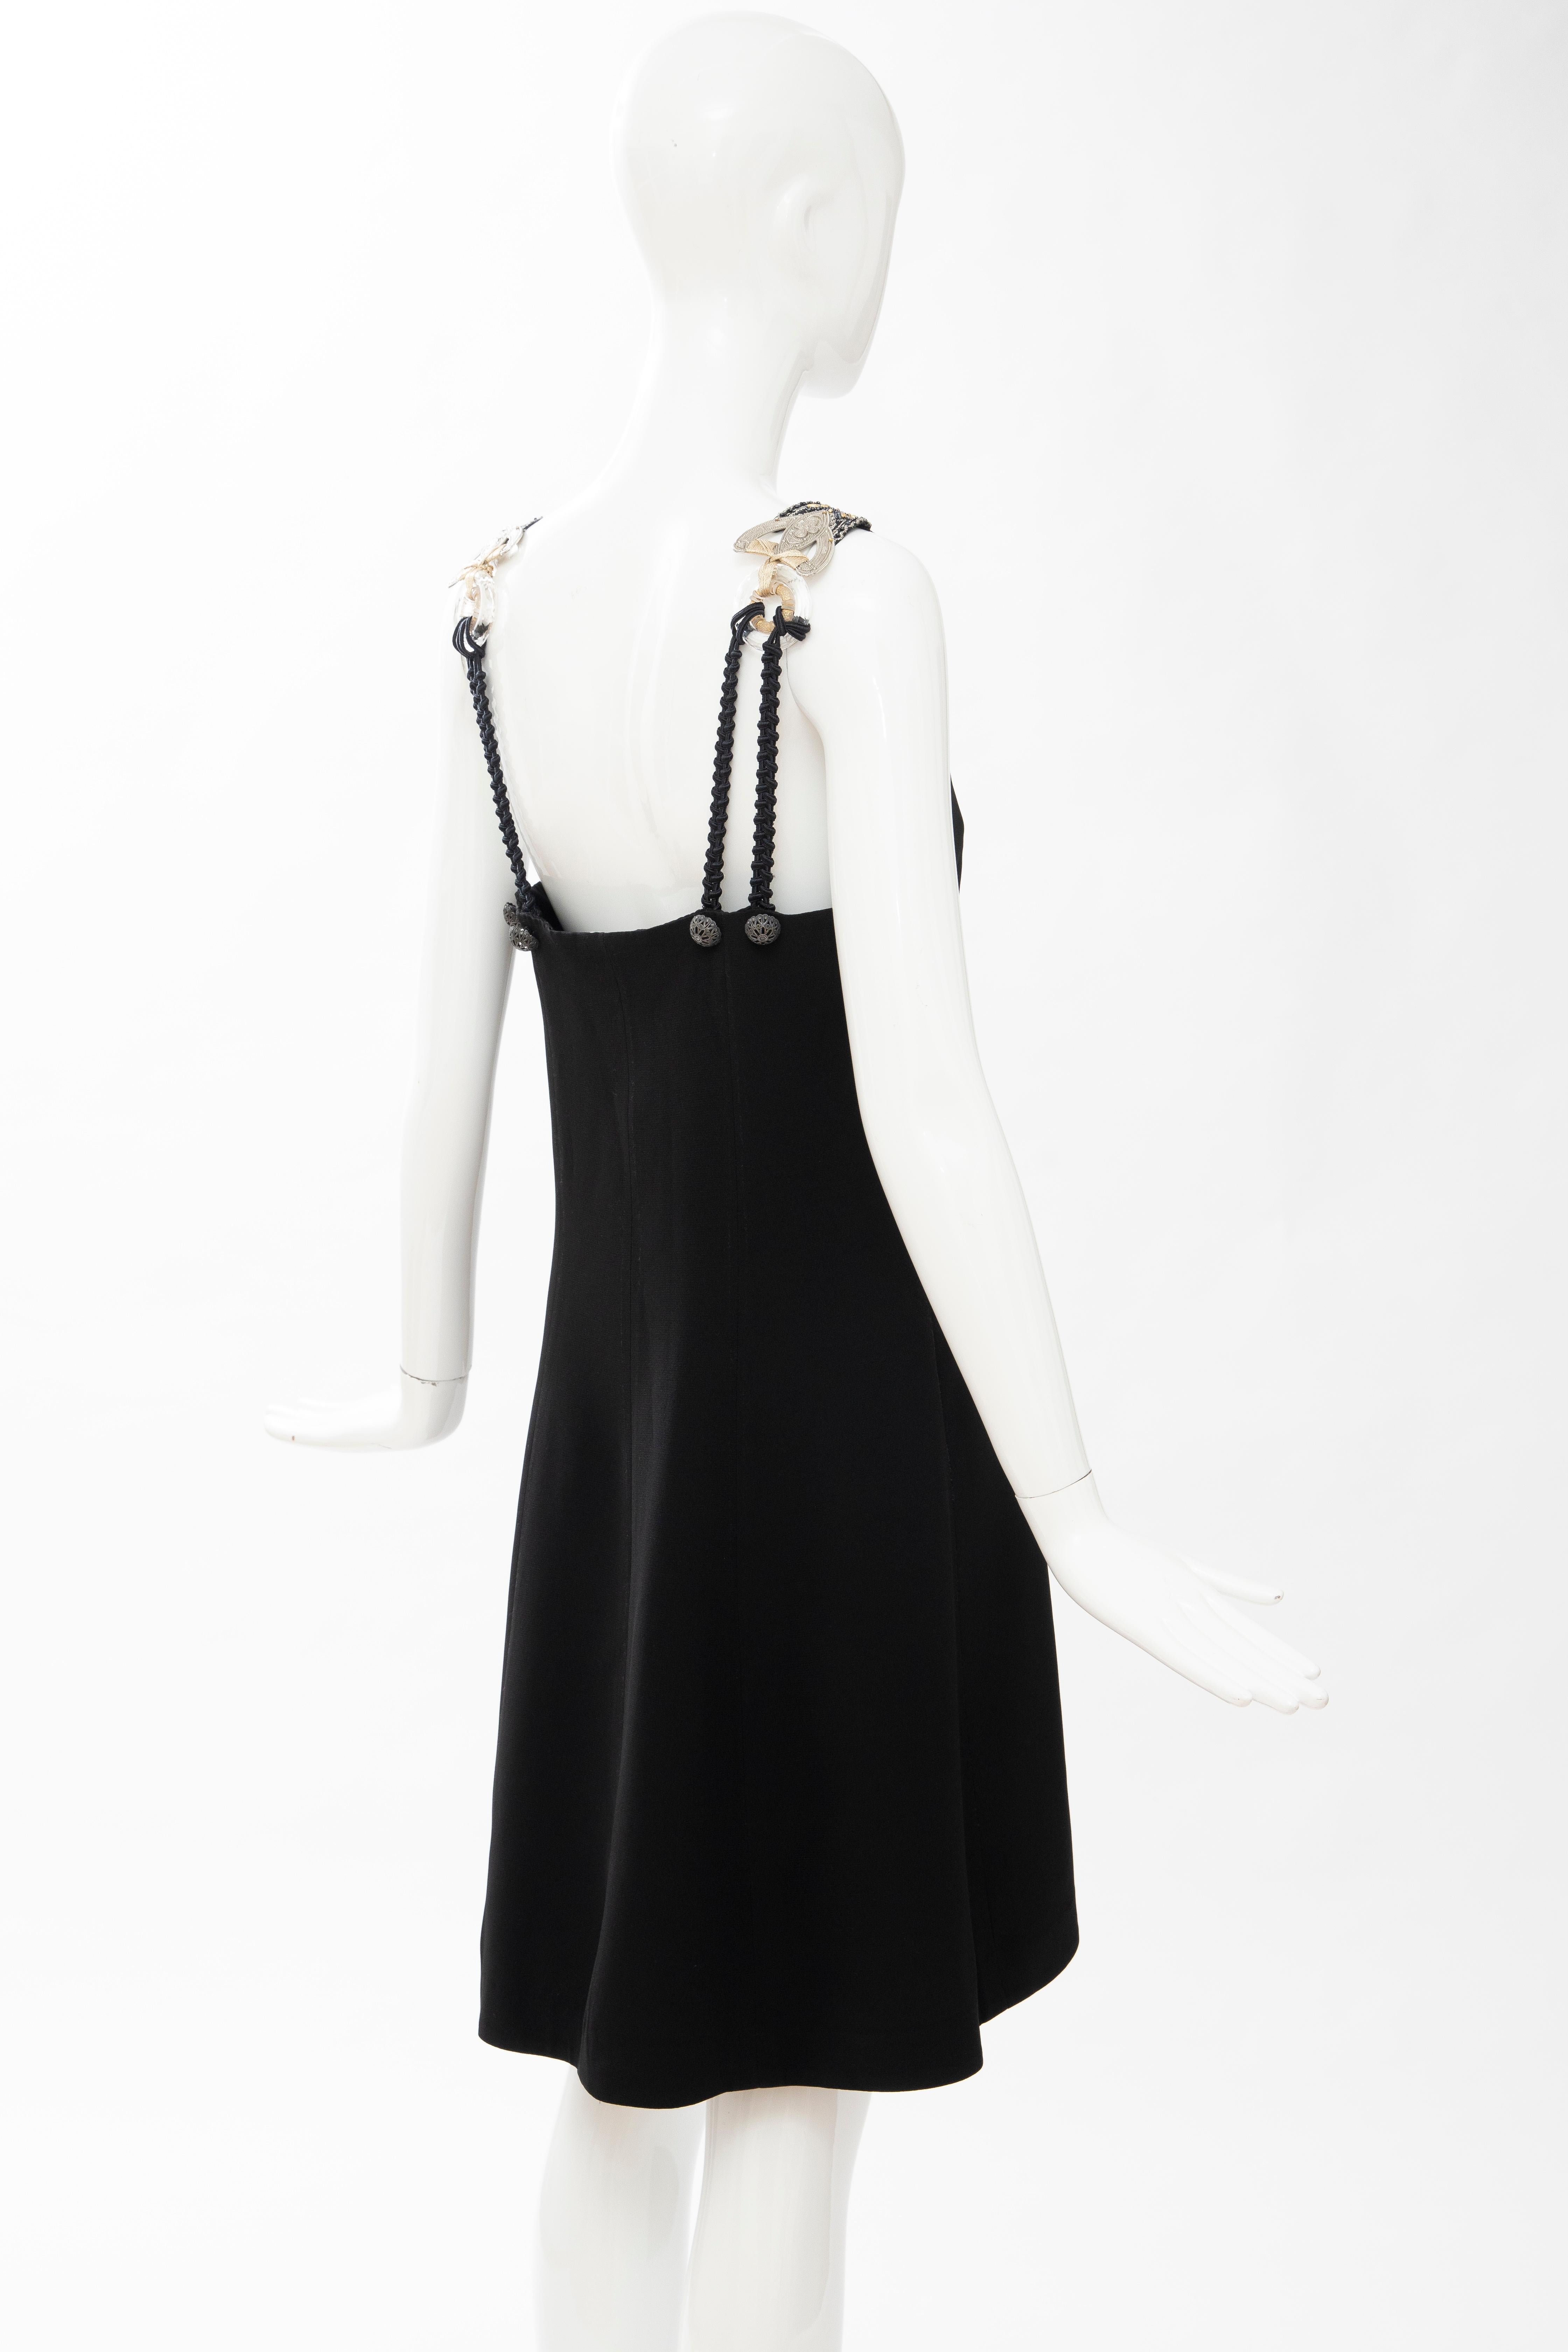 Christian Dior Gianfranco Ferré Numbered Black Embroidered Dress Ensemble, 1991 12